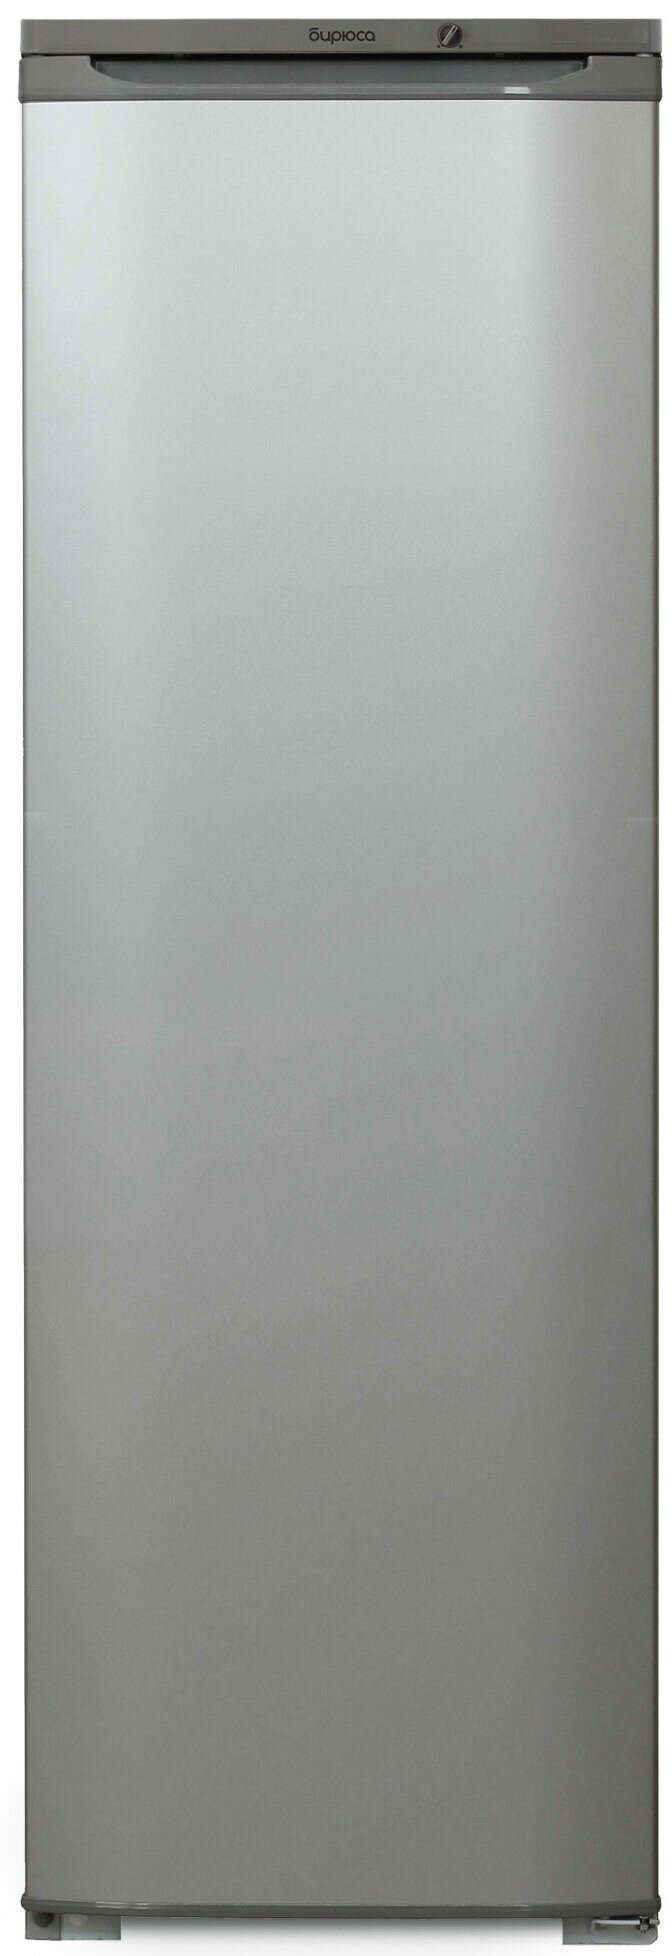 Холодильник Бирюса M107